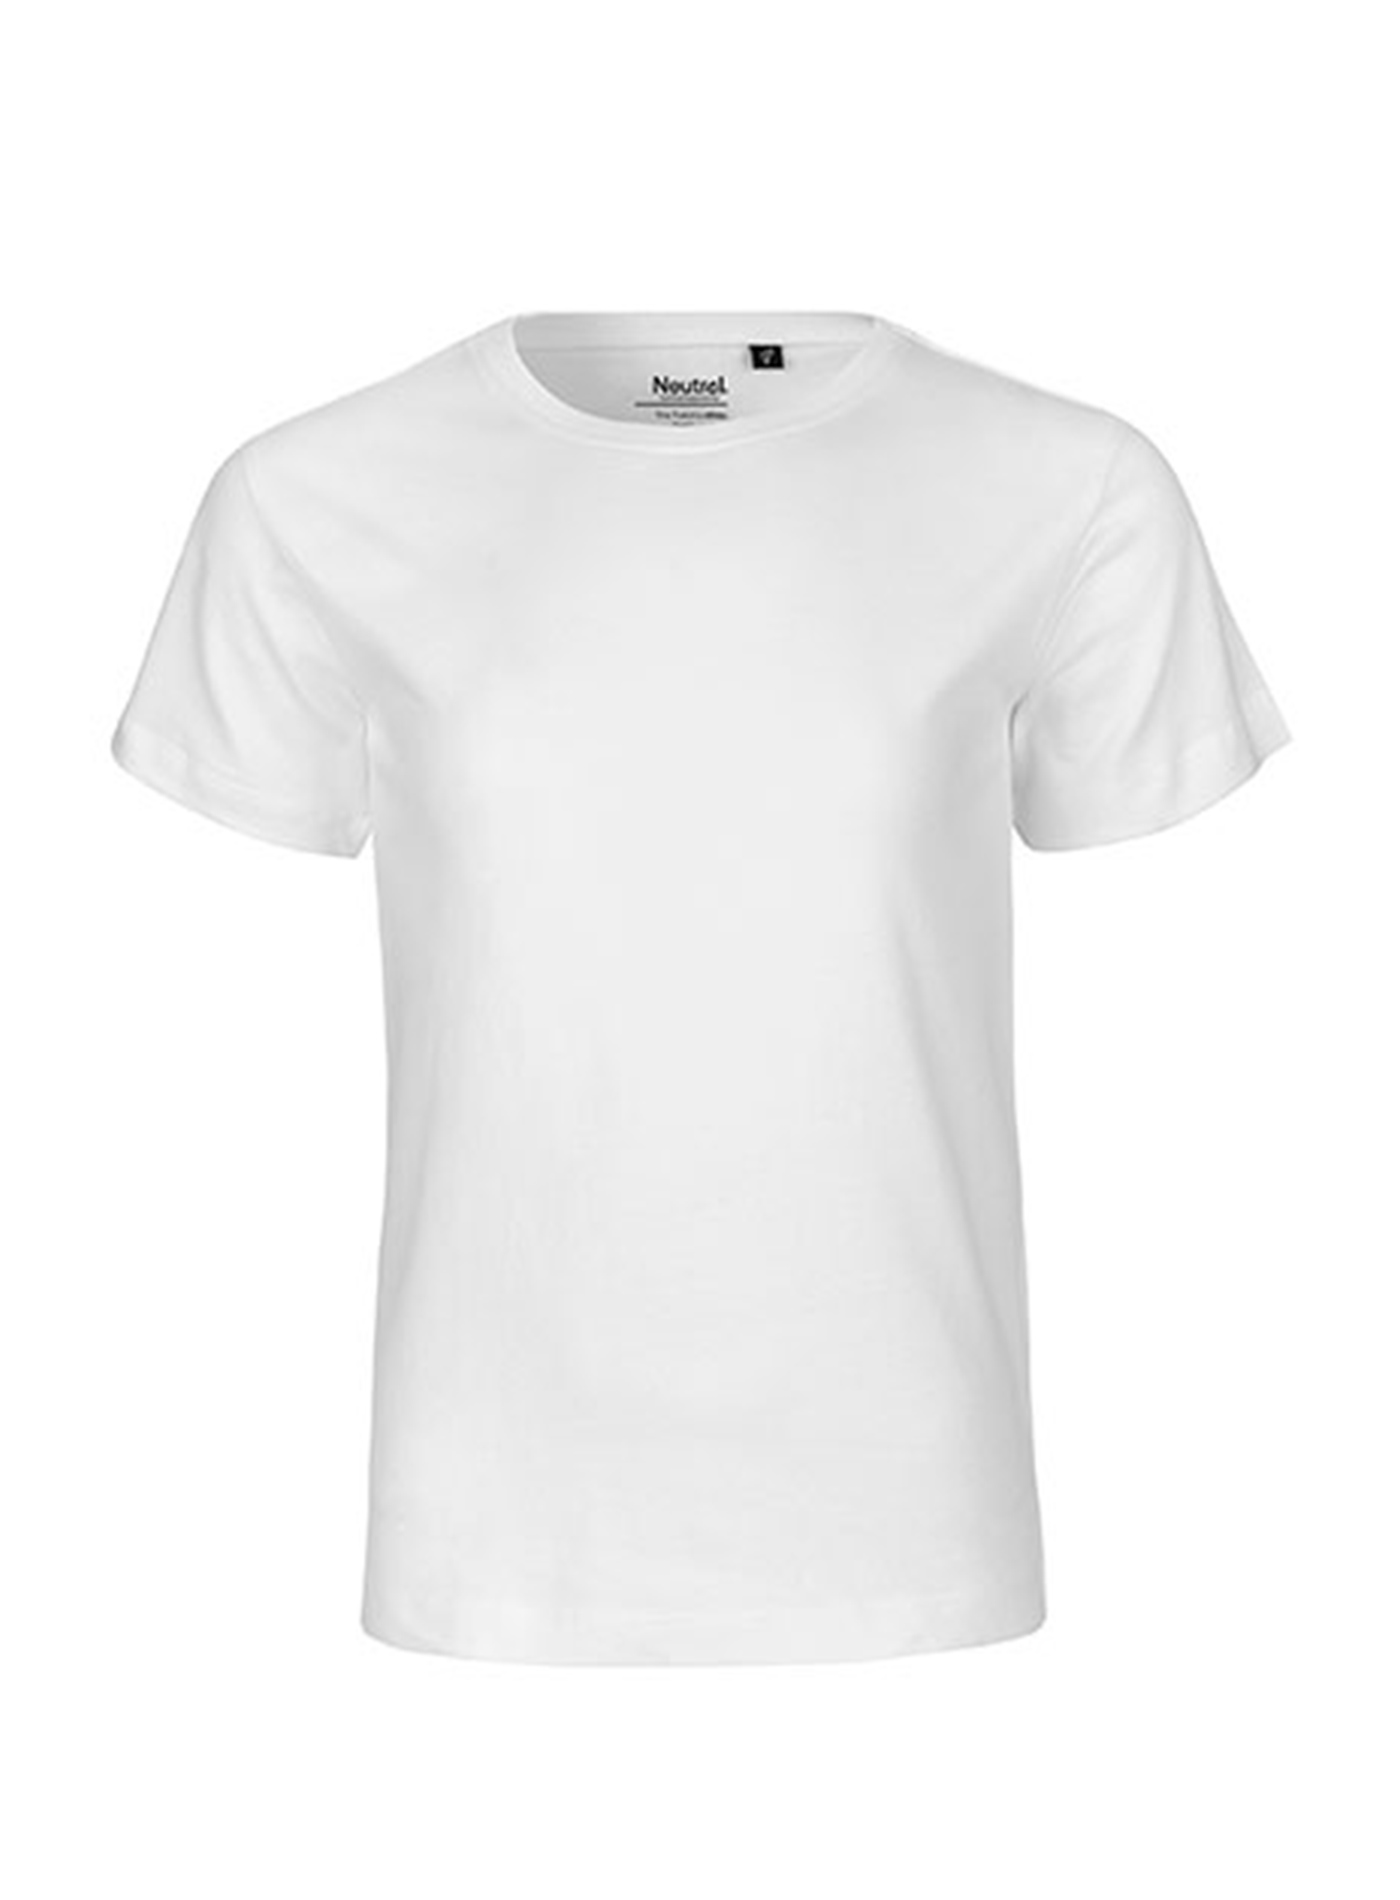 Dětské tričko Neutral - Bílá 140 (9-10)